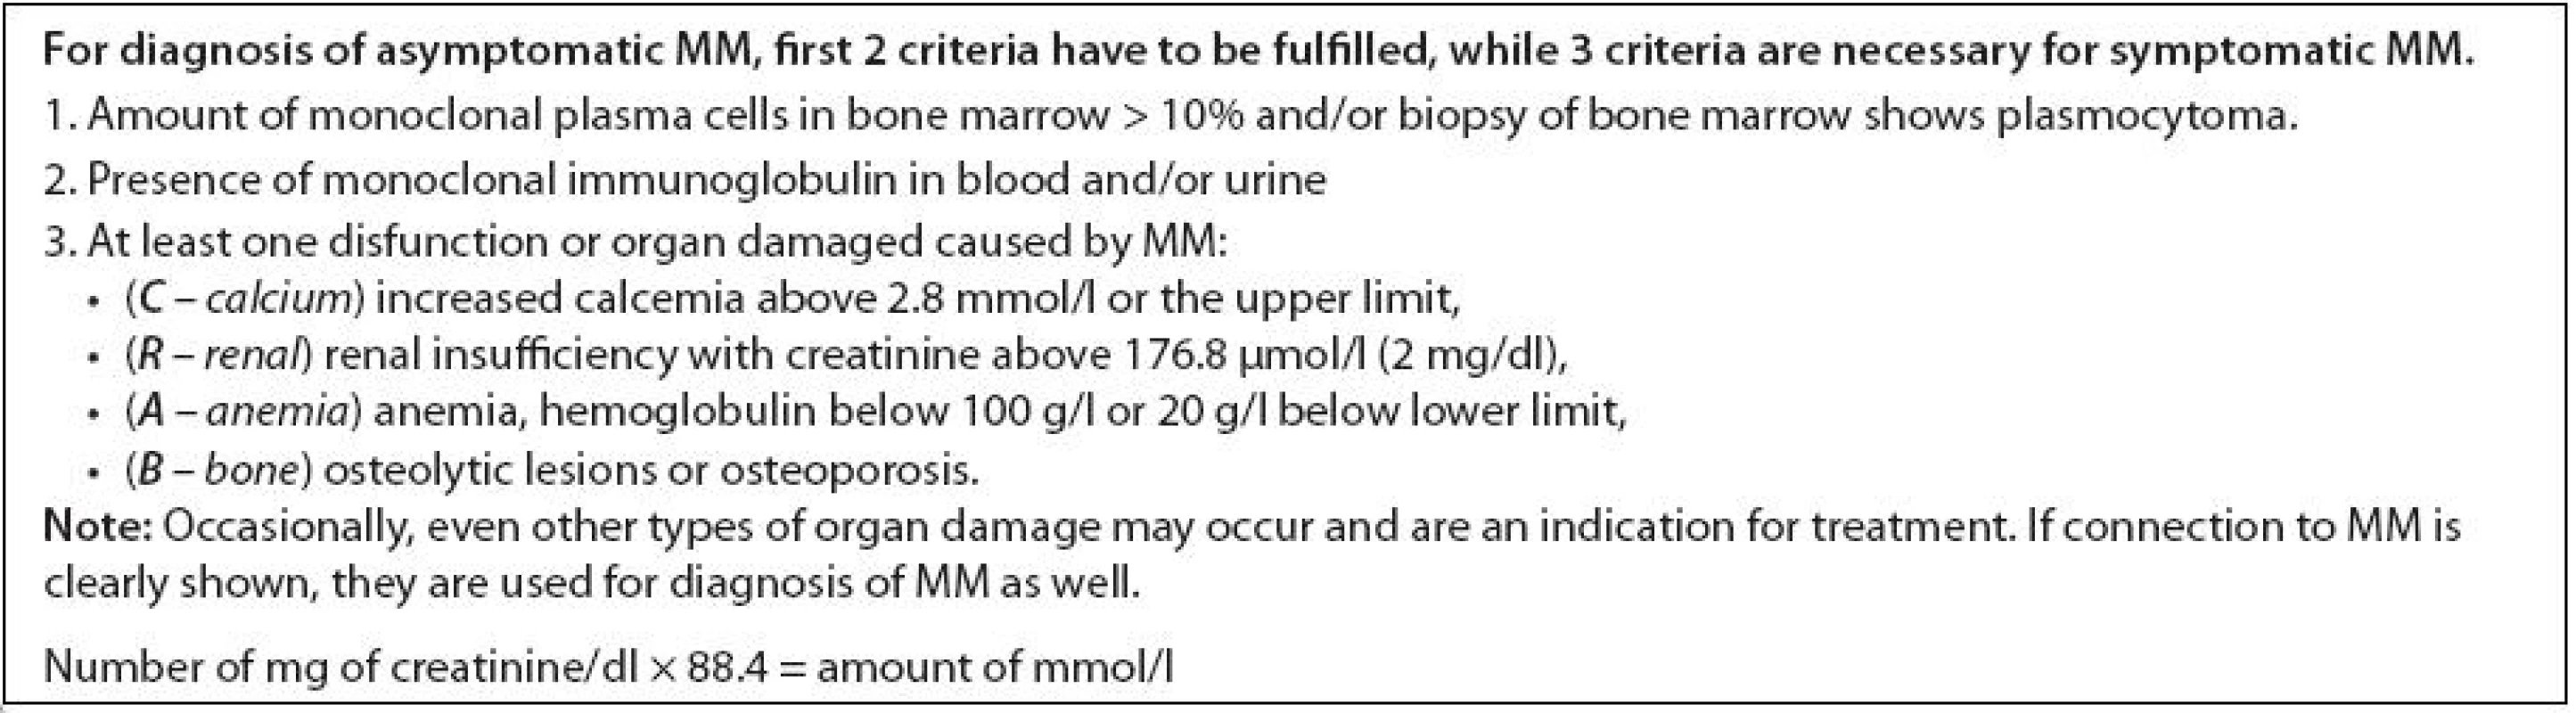 Diagnostic criteria of multiple myeloma based on IMWG, 2003.